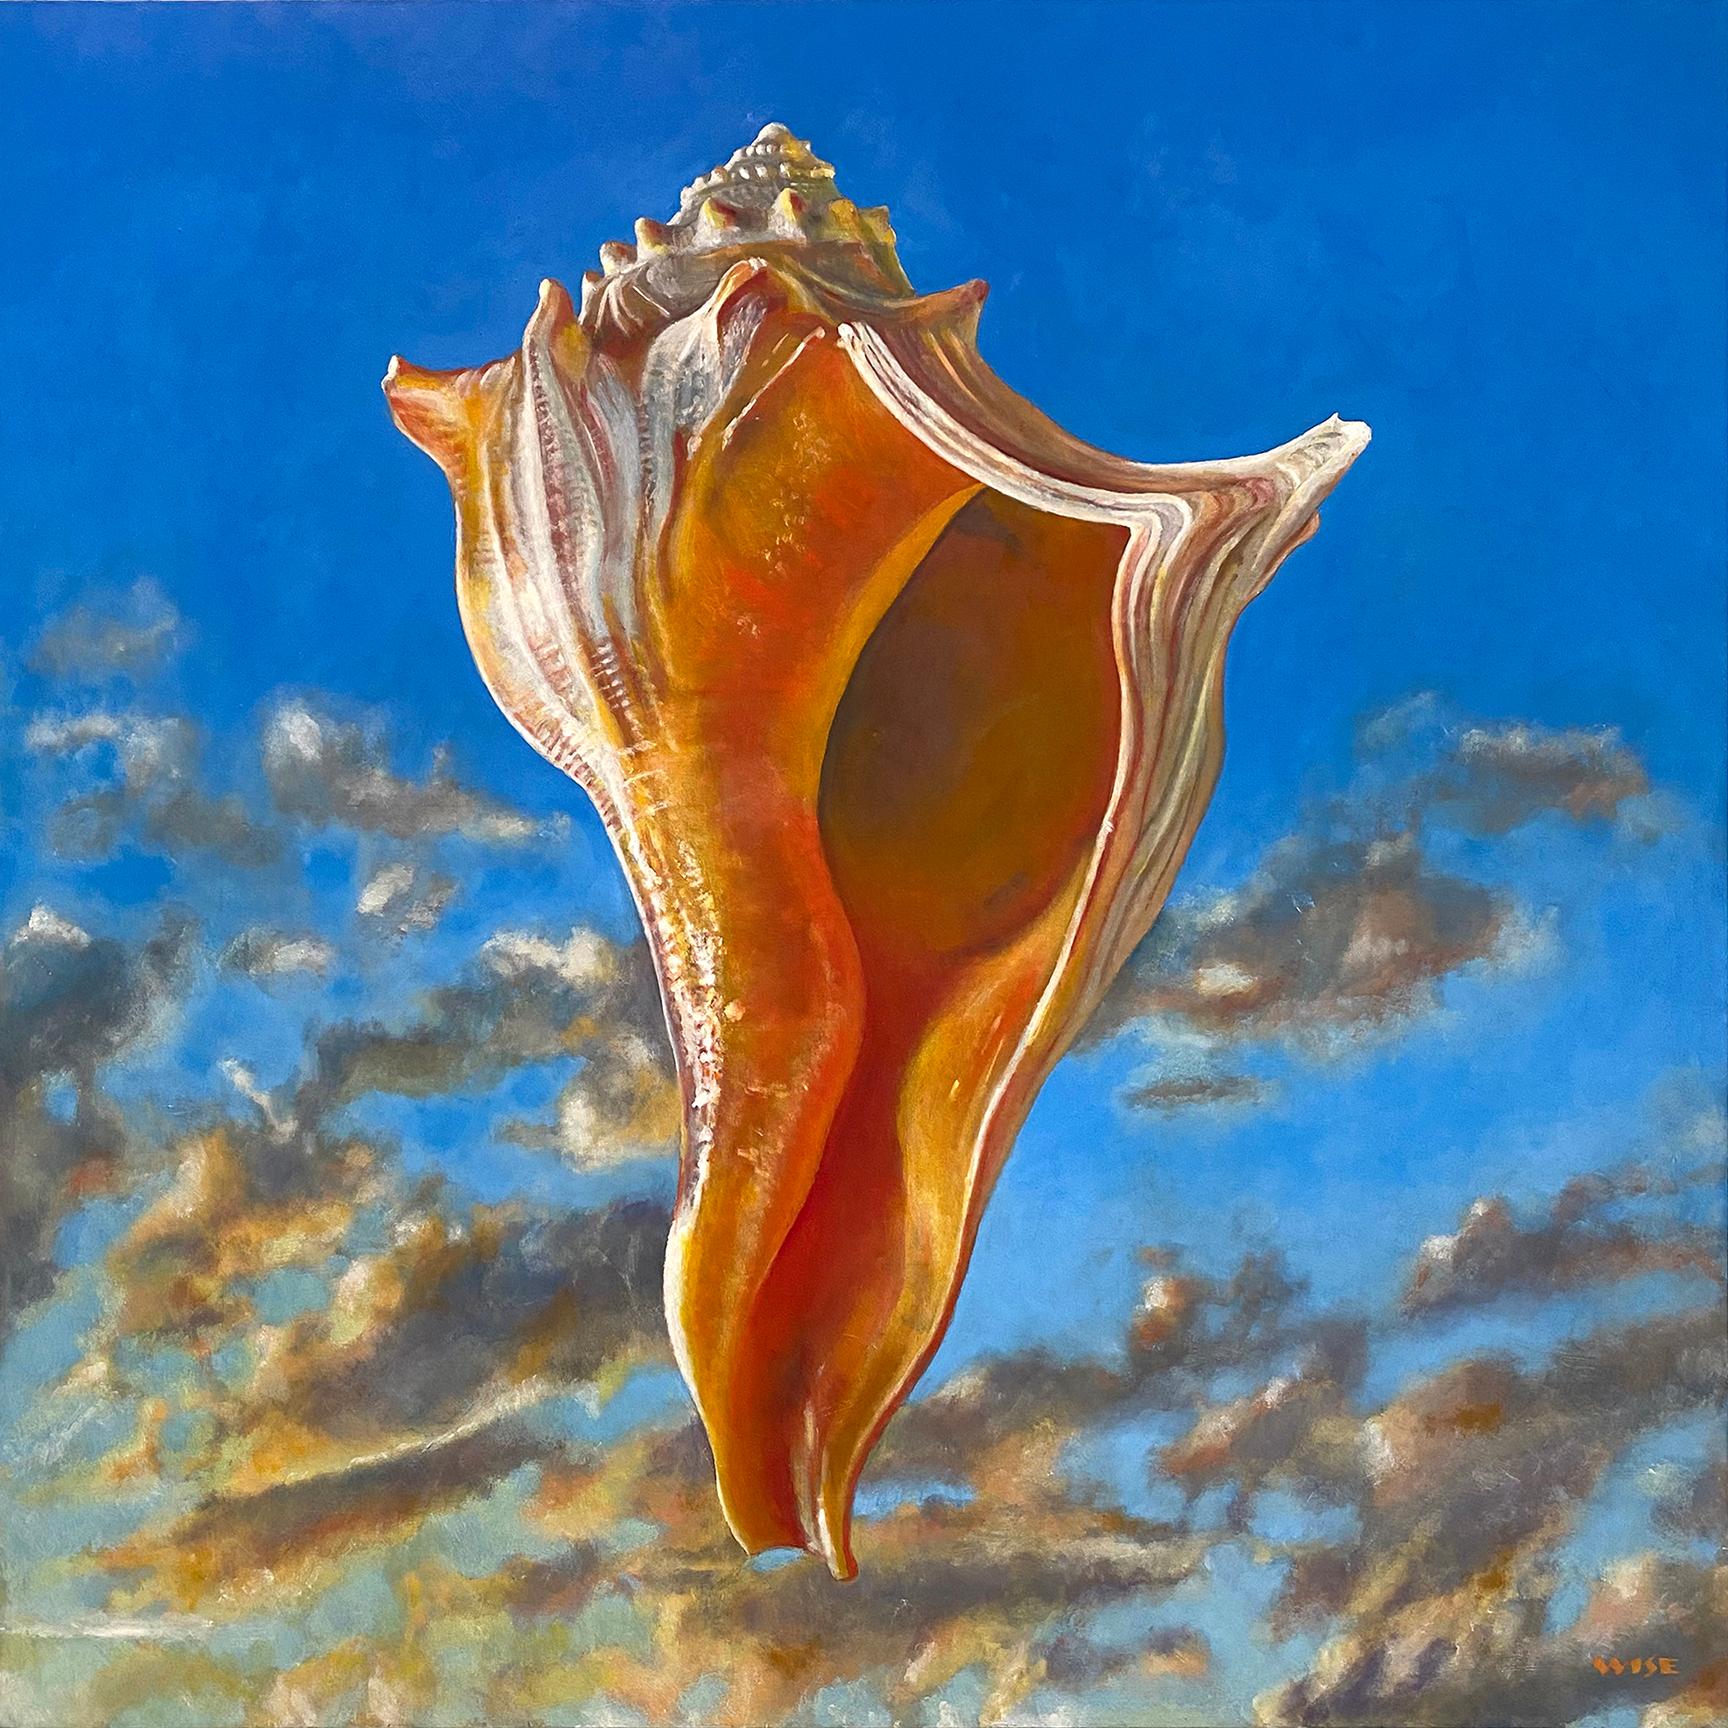 Jim Wise Still-Life Painting – ""Arcanum"" - Muschelgemälde - Himmelslandschaft - Realismus - Georgia O'Keeffe